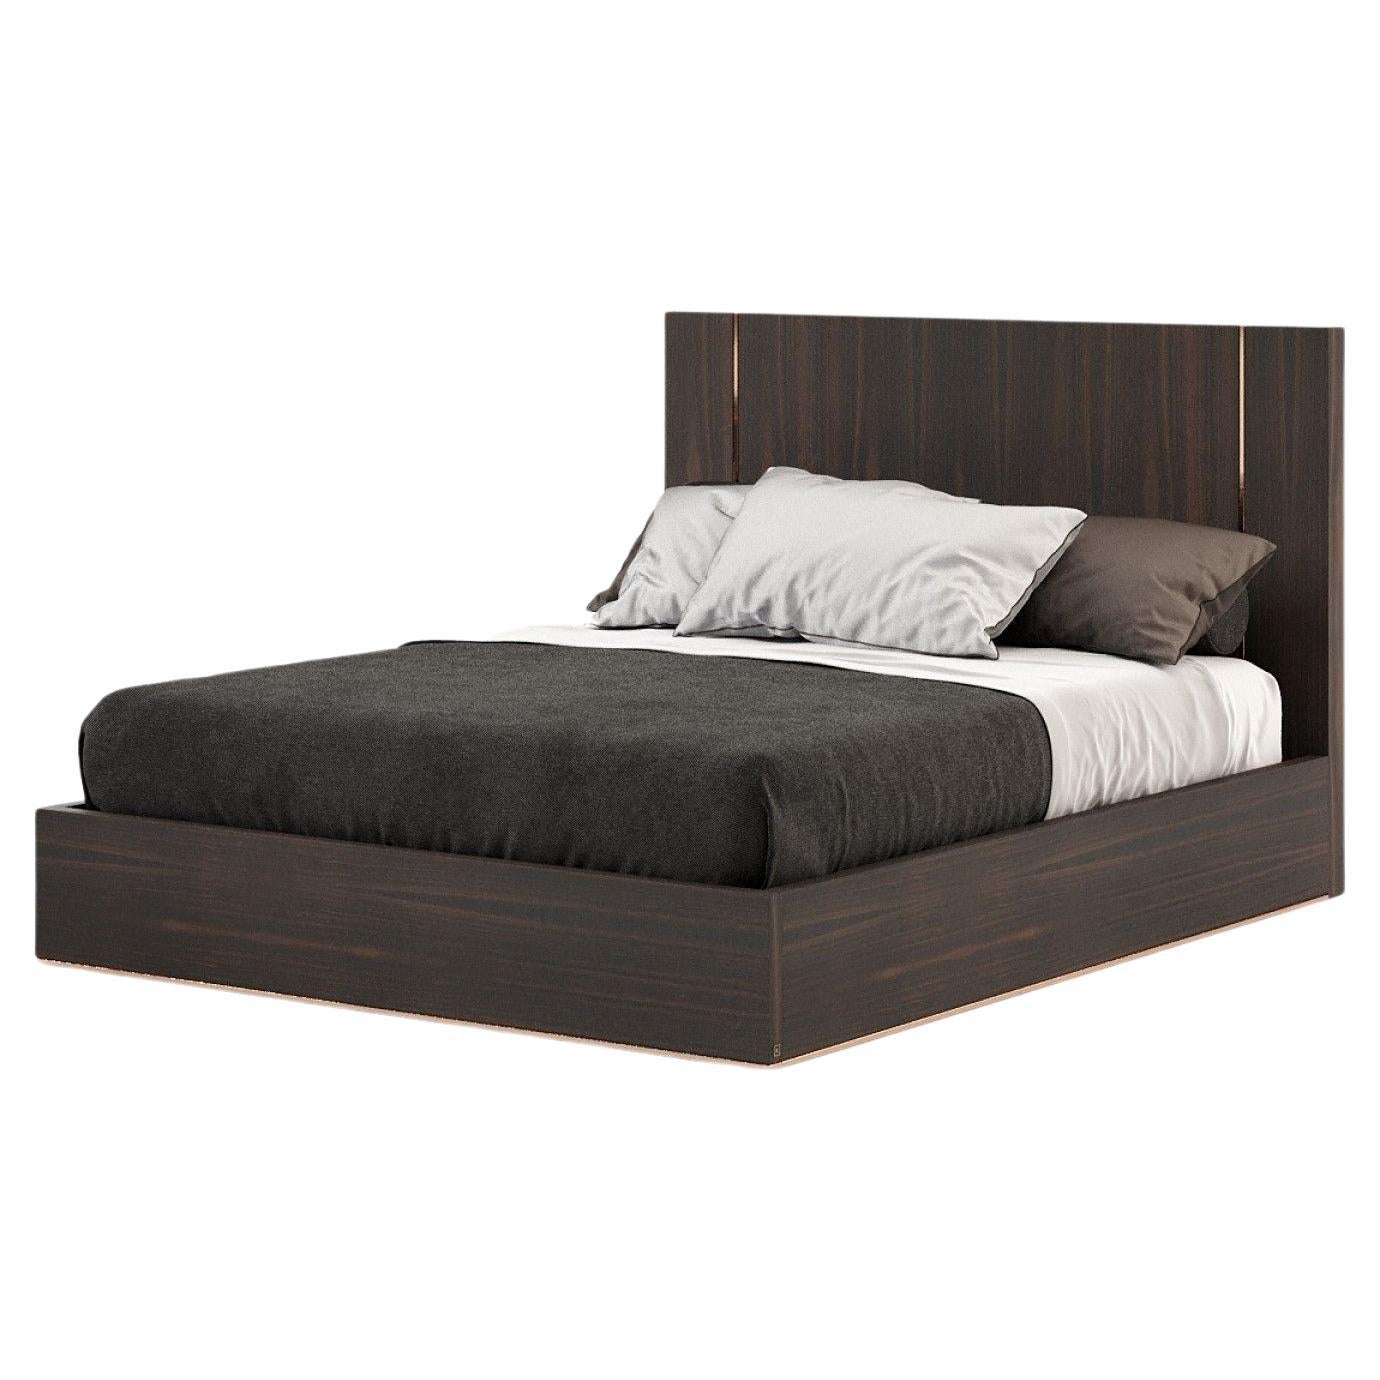 American Queen Size Bed Offered in Wood Veneer & Metal Detailing